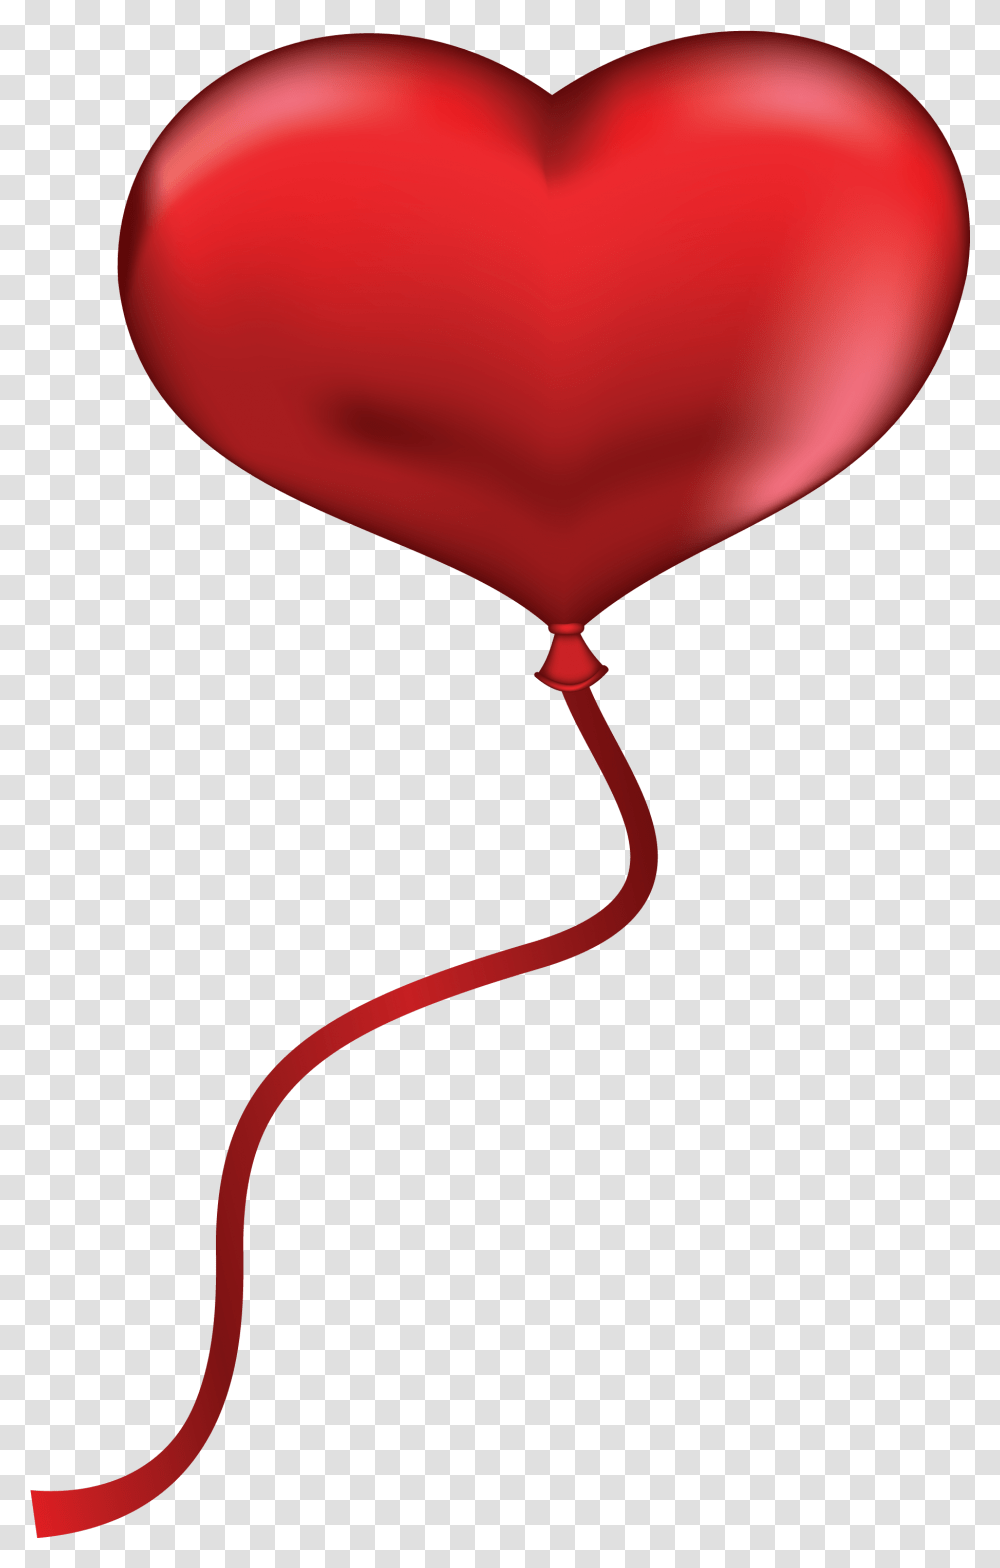 Heart Balloons High Quality Image Clip Art Heart Balloon Transparent Png